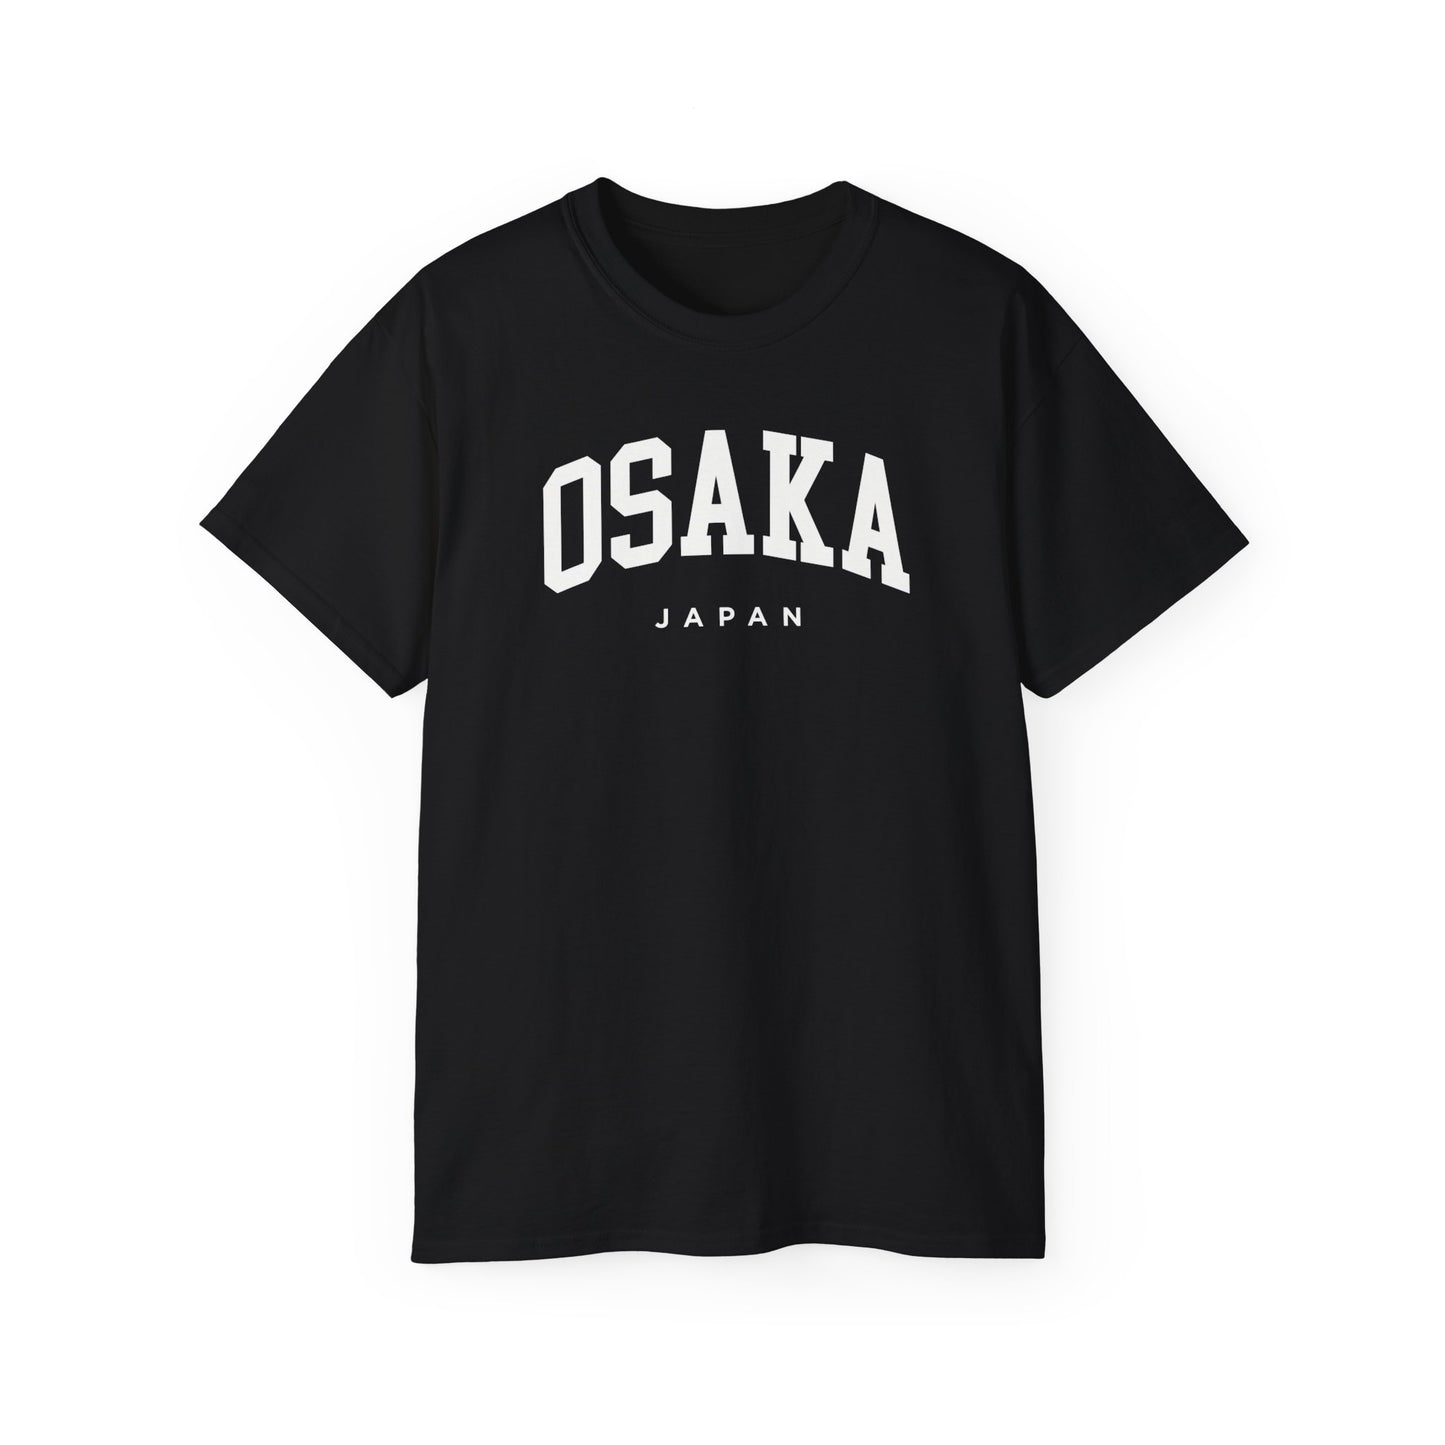 Osaka Japan Tee